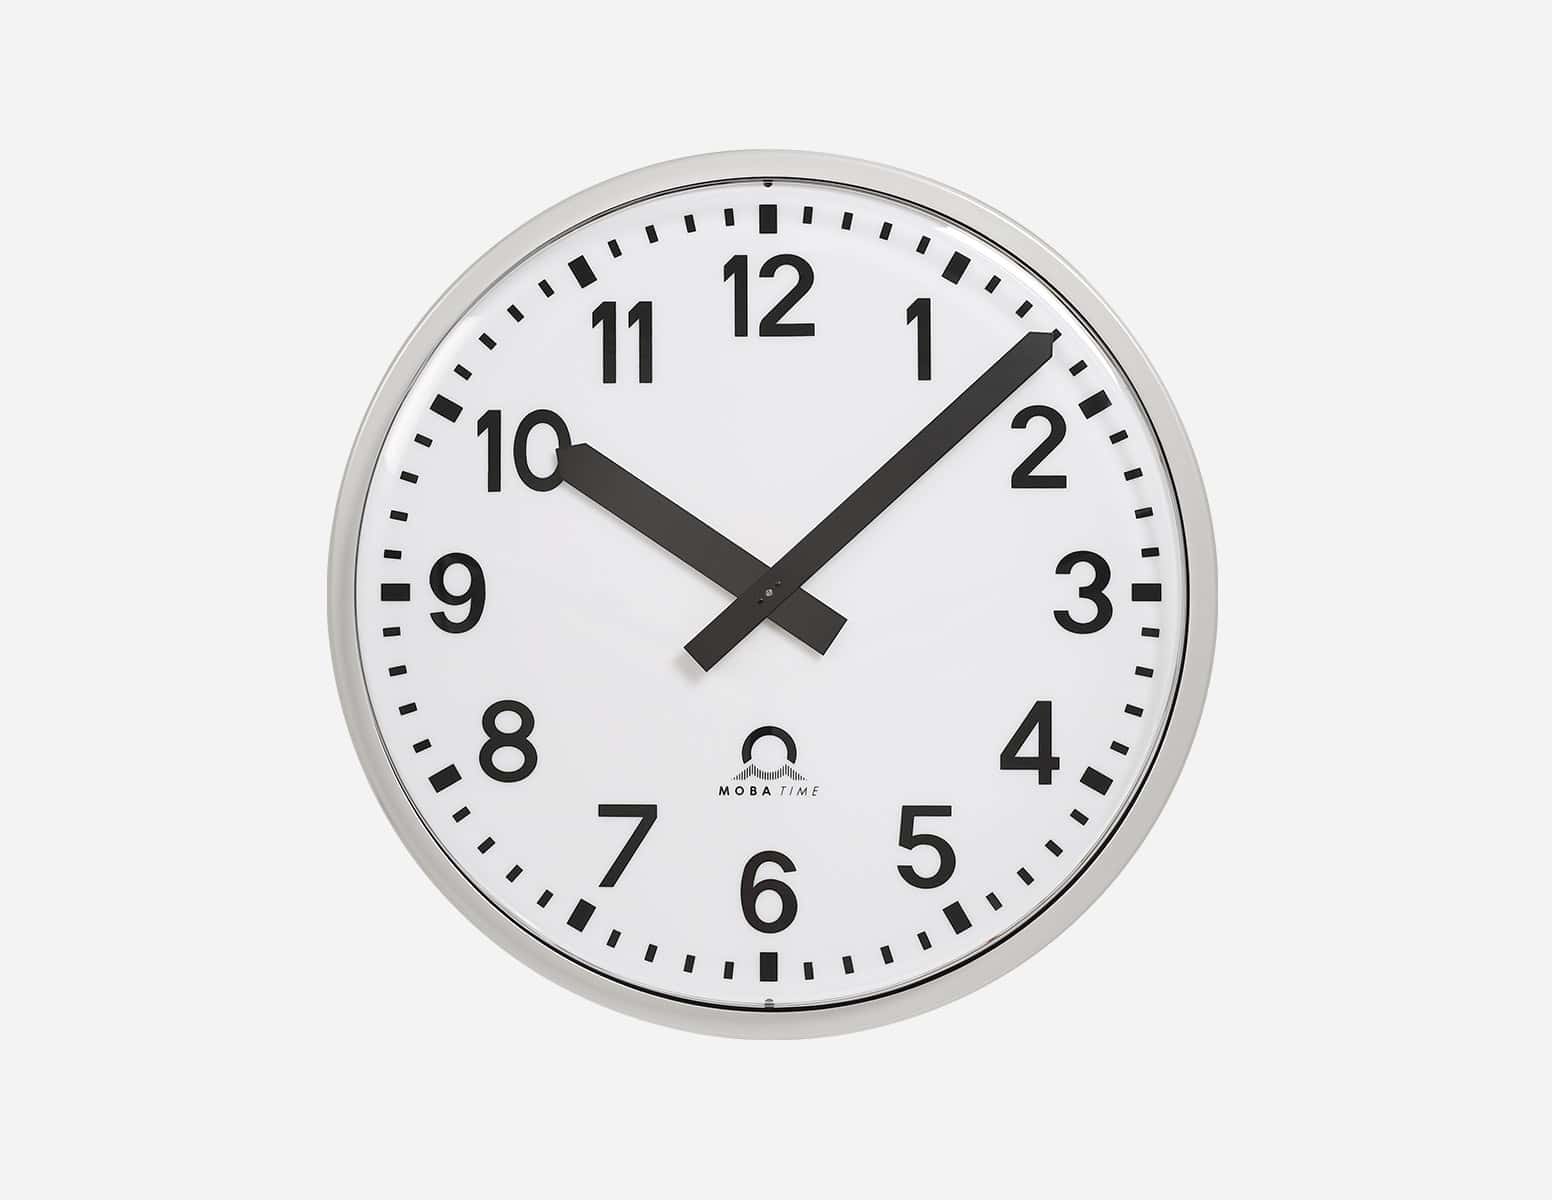 Mobatime Metroline outdoor analogue clock